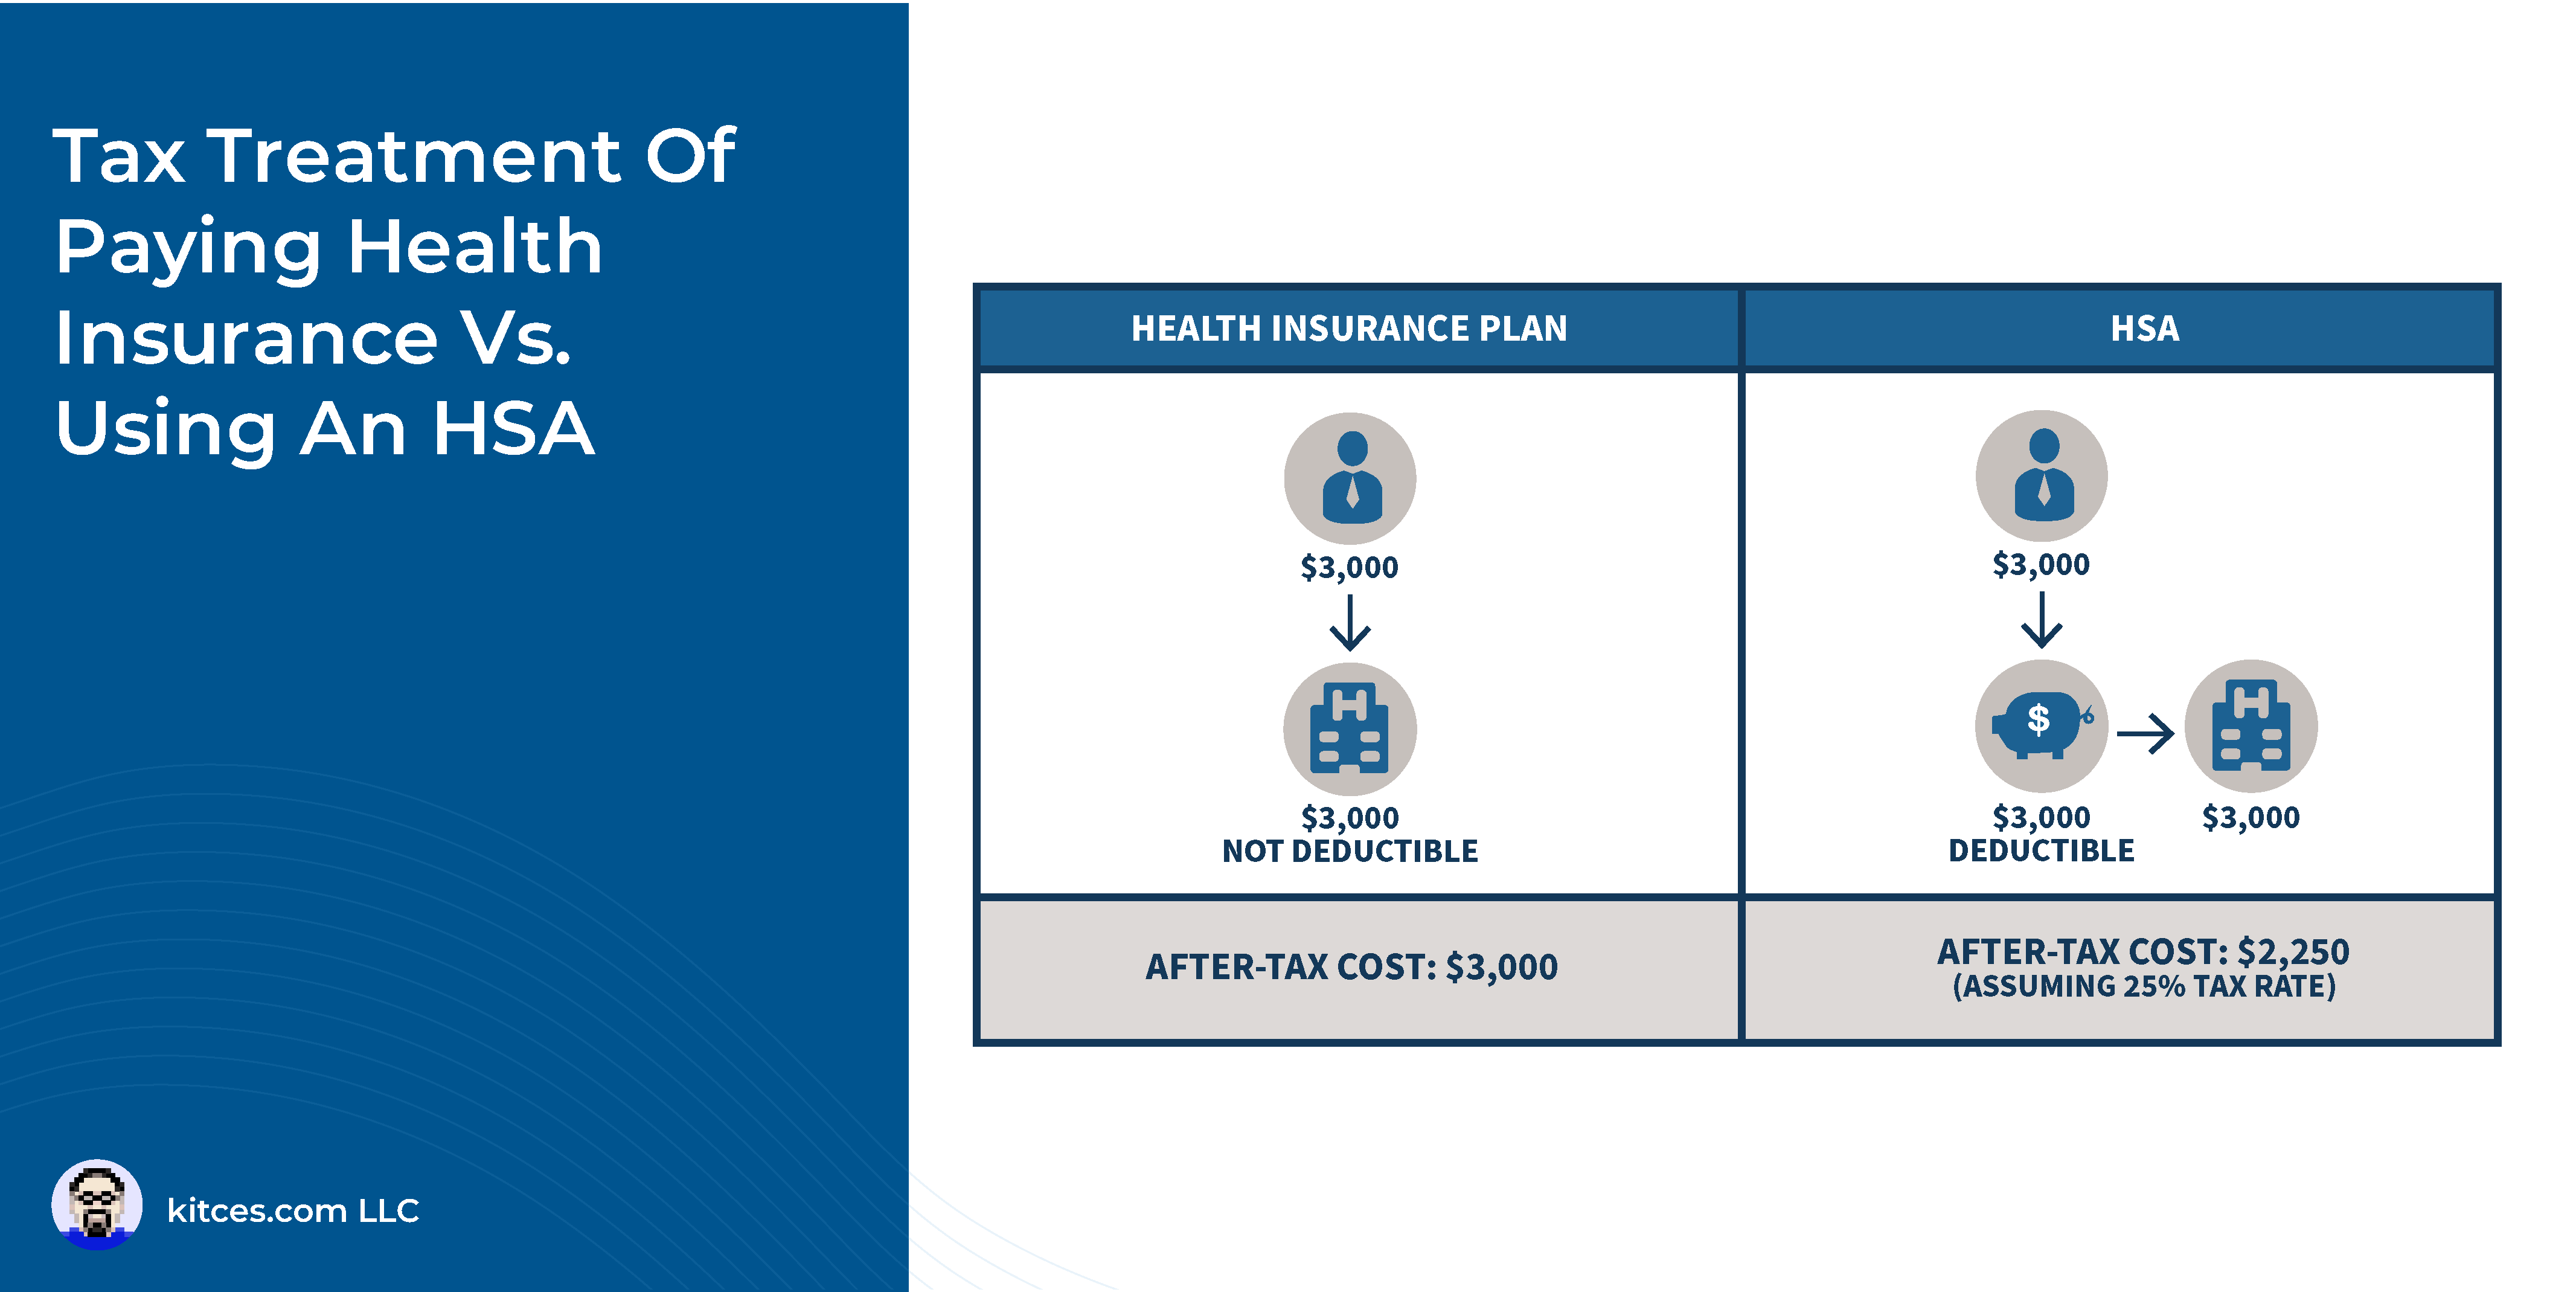 HSA Health Savings Account - Qualified Medical Expenses (QME)